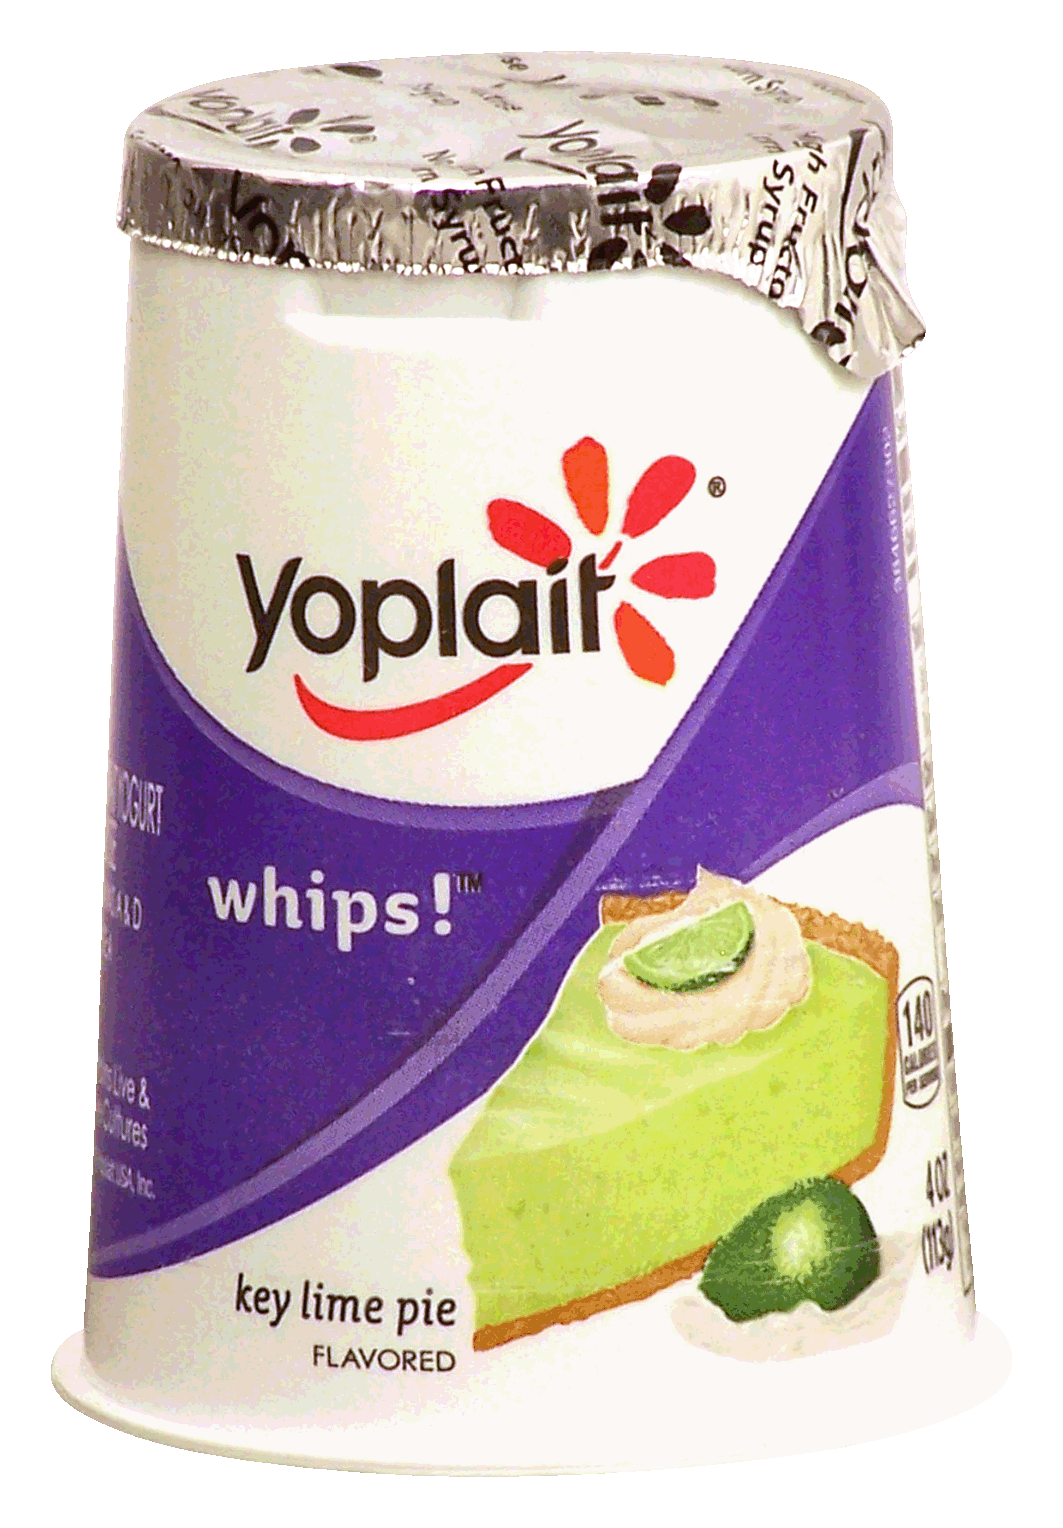 Yoplait Whips! key lime pie lowfat yogurt mousse Full-Size Picture